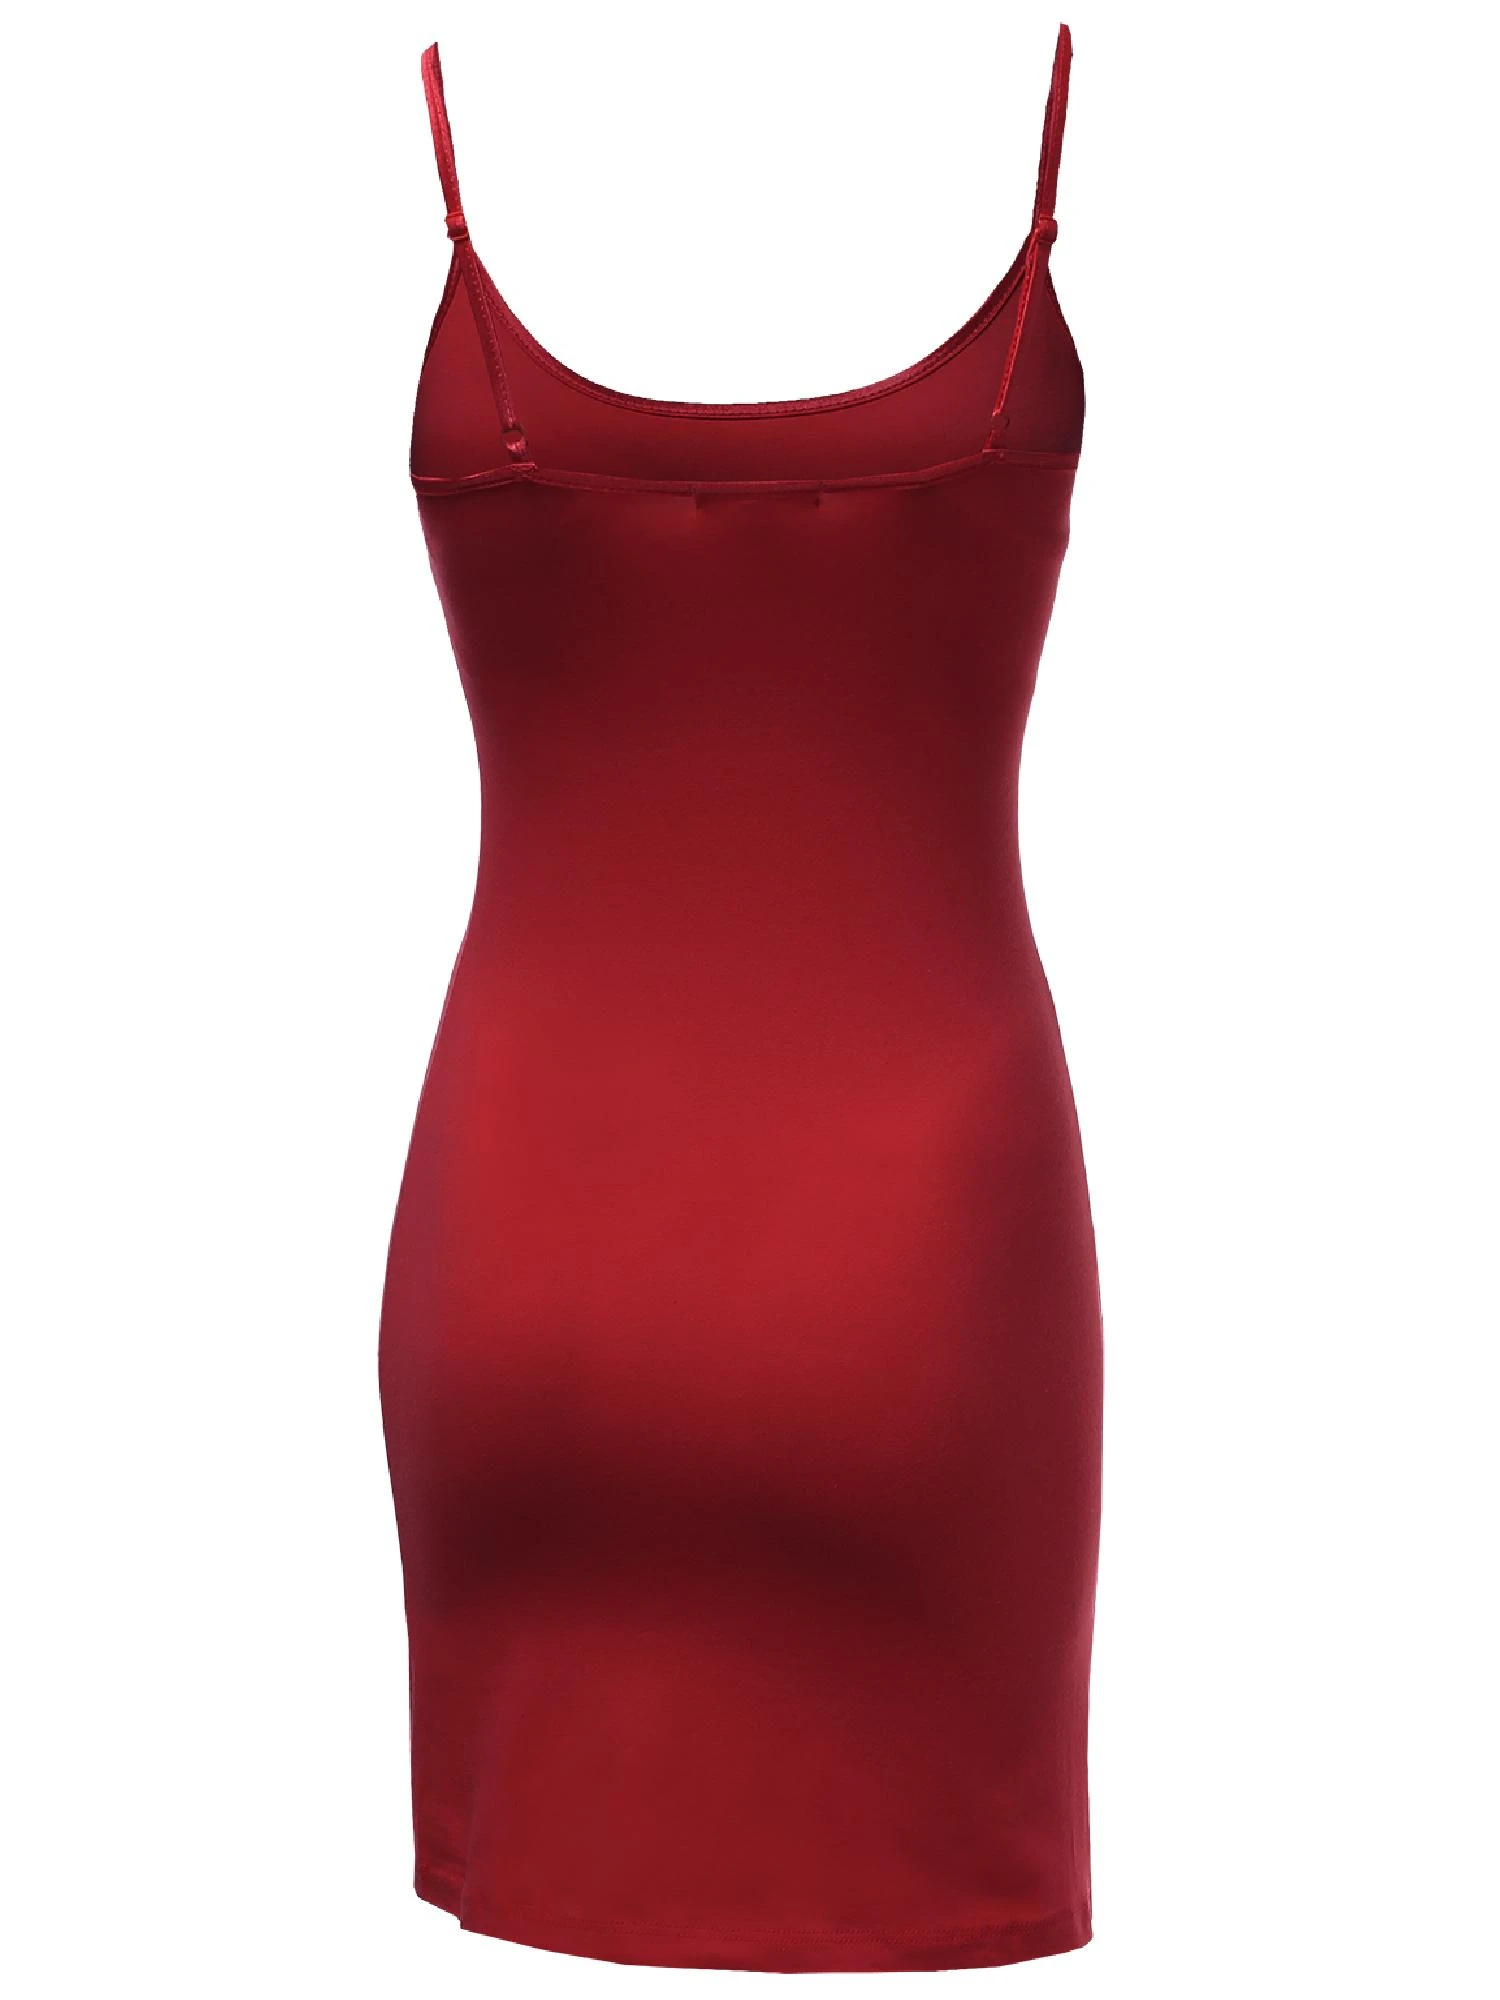 OEM Custom High Quality Sleepwear Leisure Silk Satin Women&#x27;s Basic Solid Spaghetti Strap Camisole Slip Dress